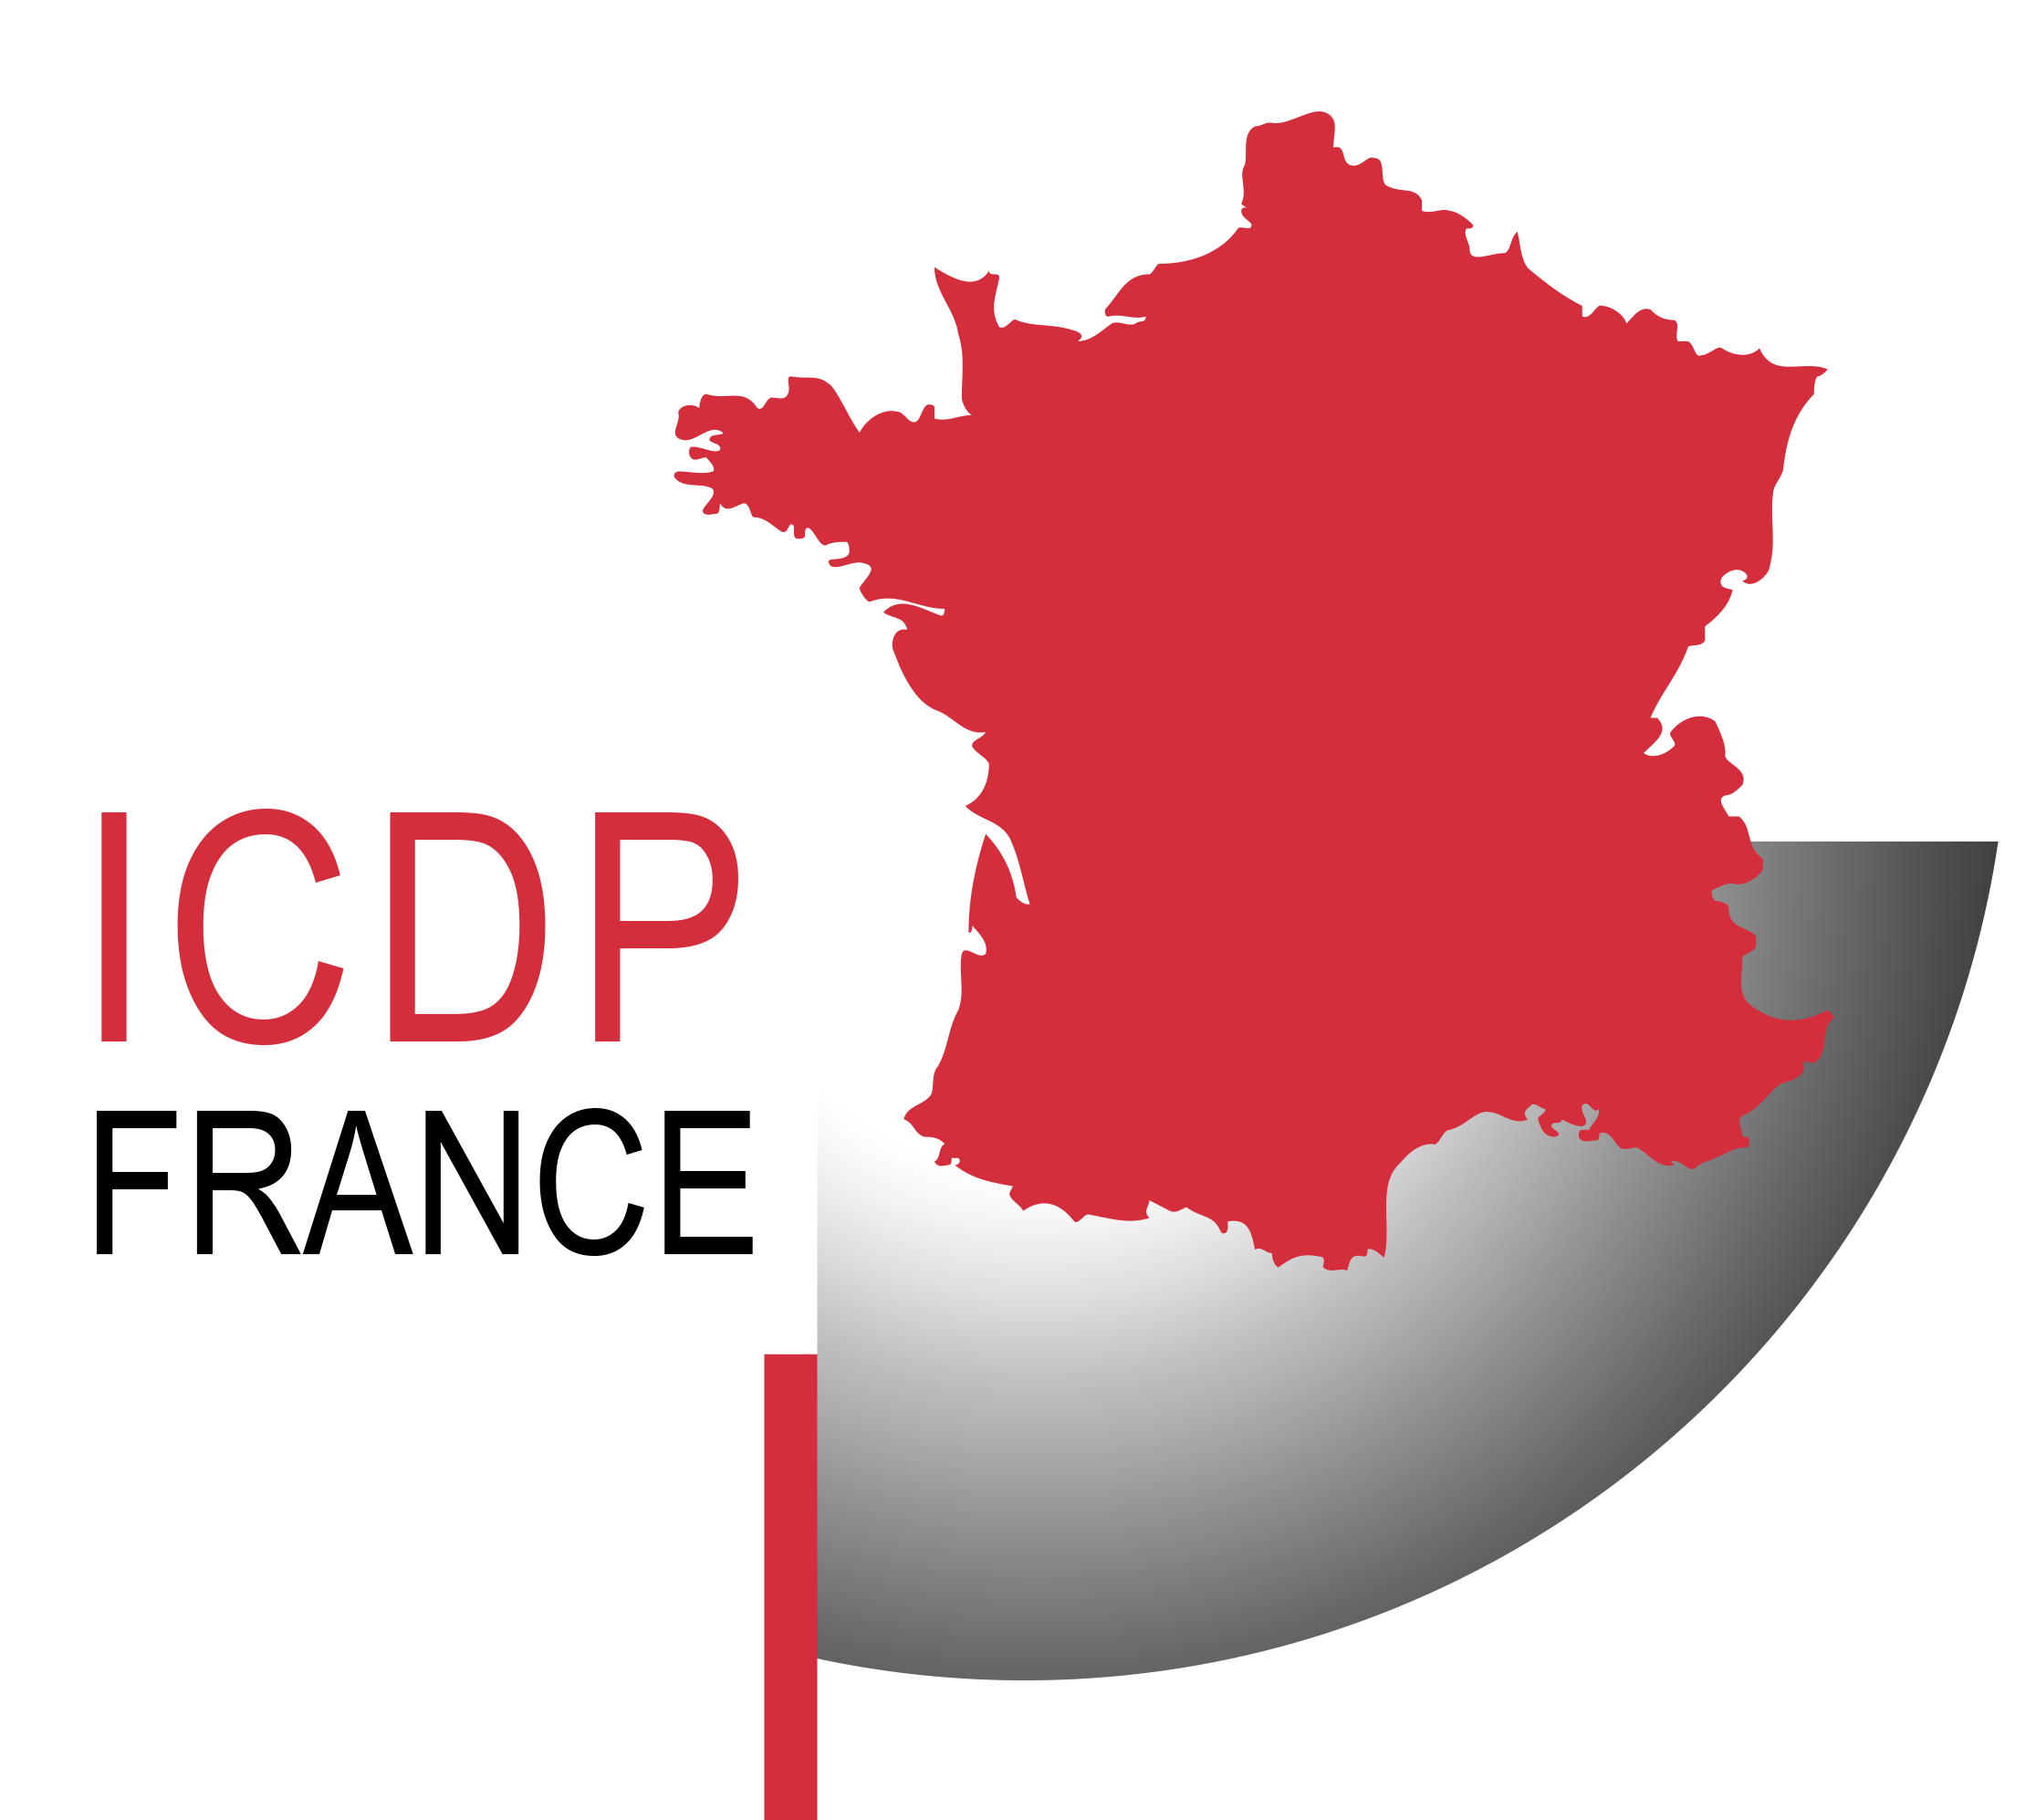 ICDP France